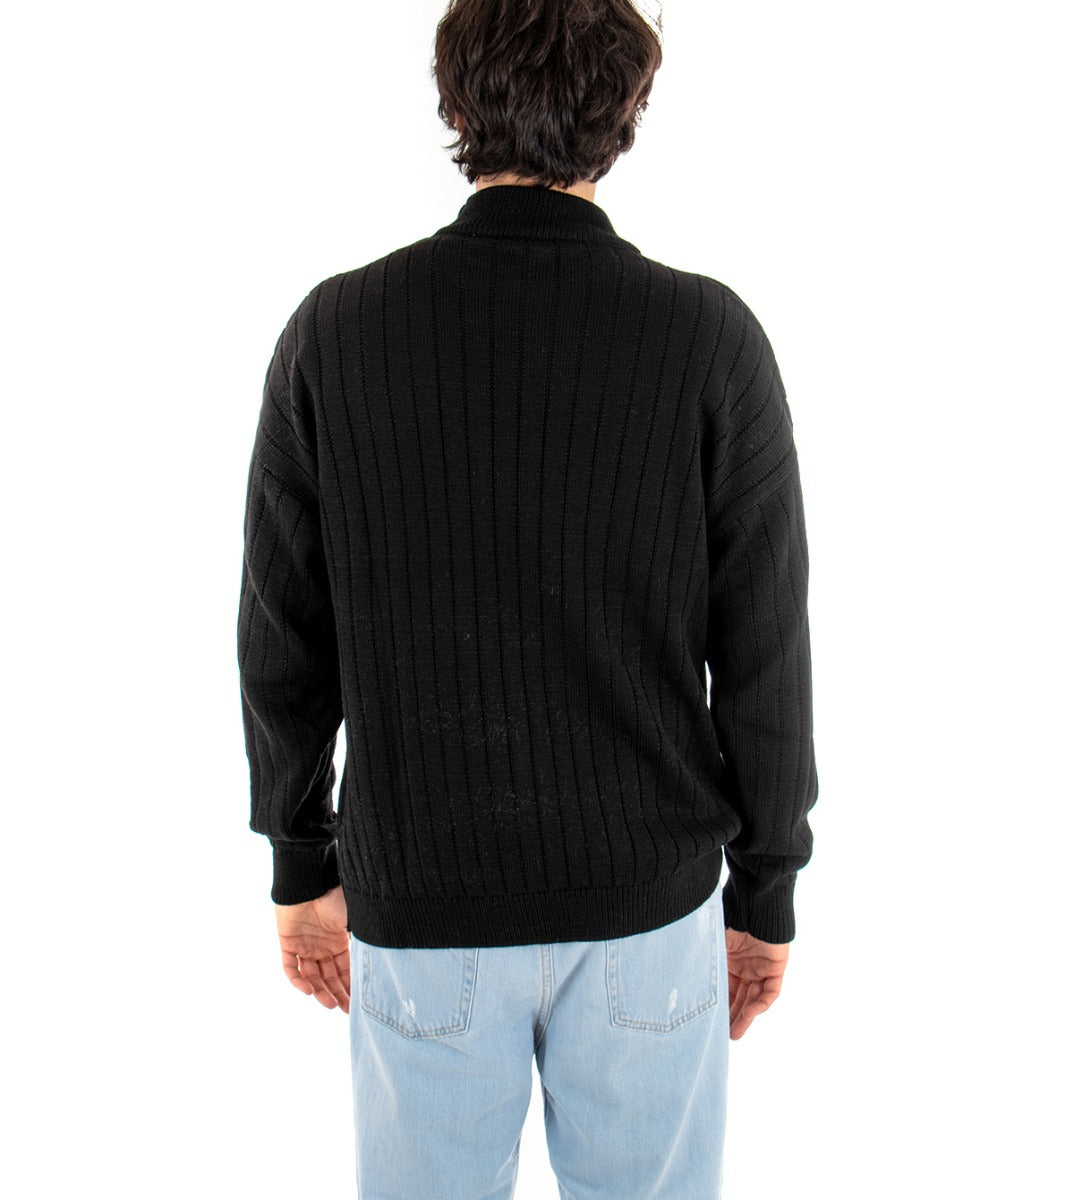 Men's Half-Neck Sweater Solid Black Ribbed Weave Stripes GIOSAL